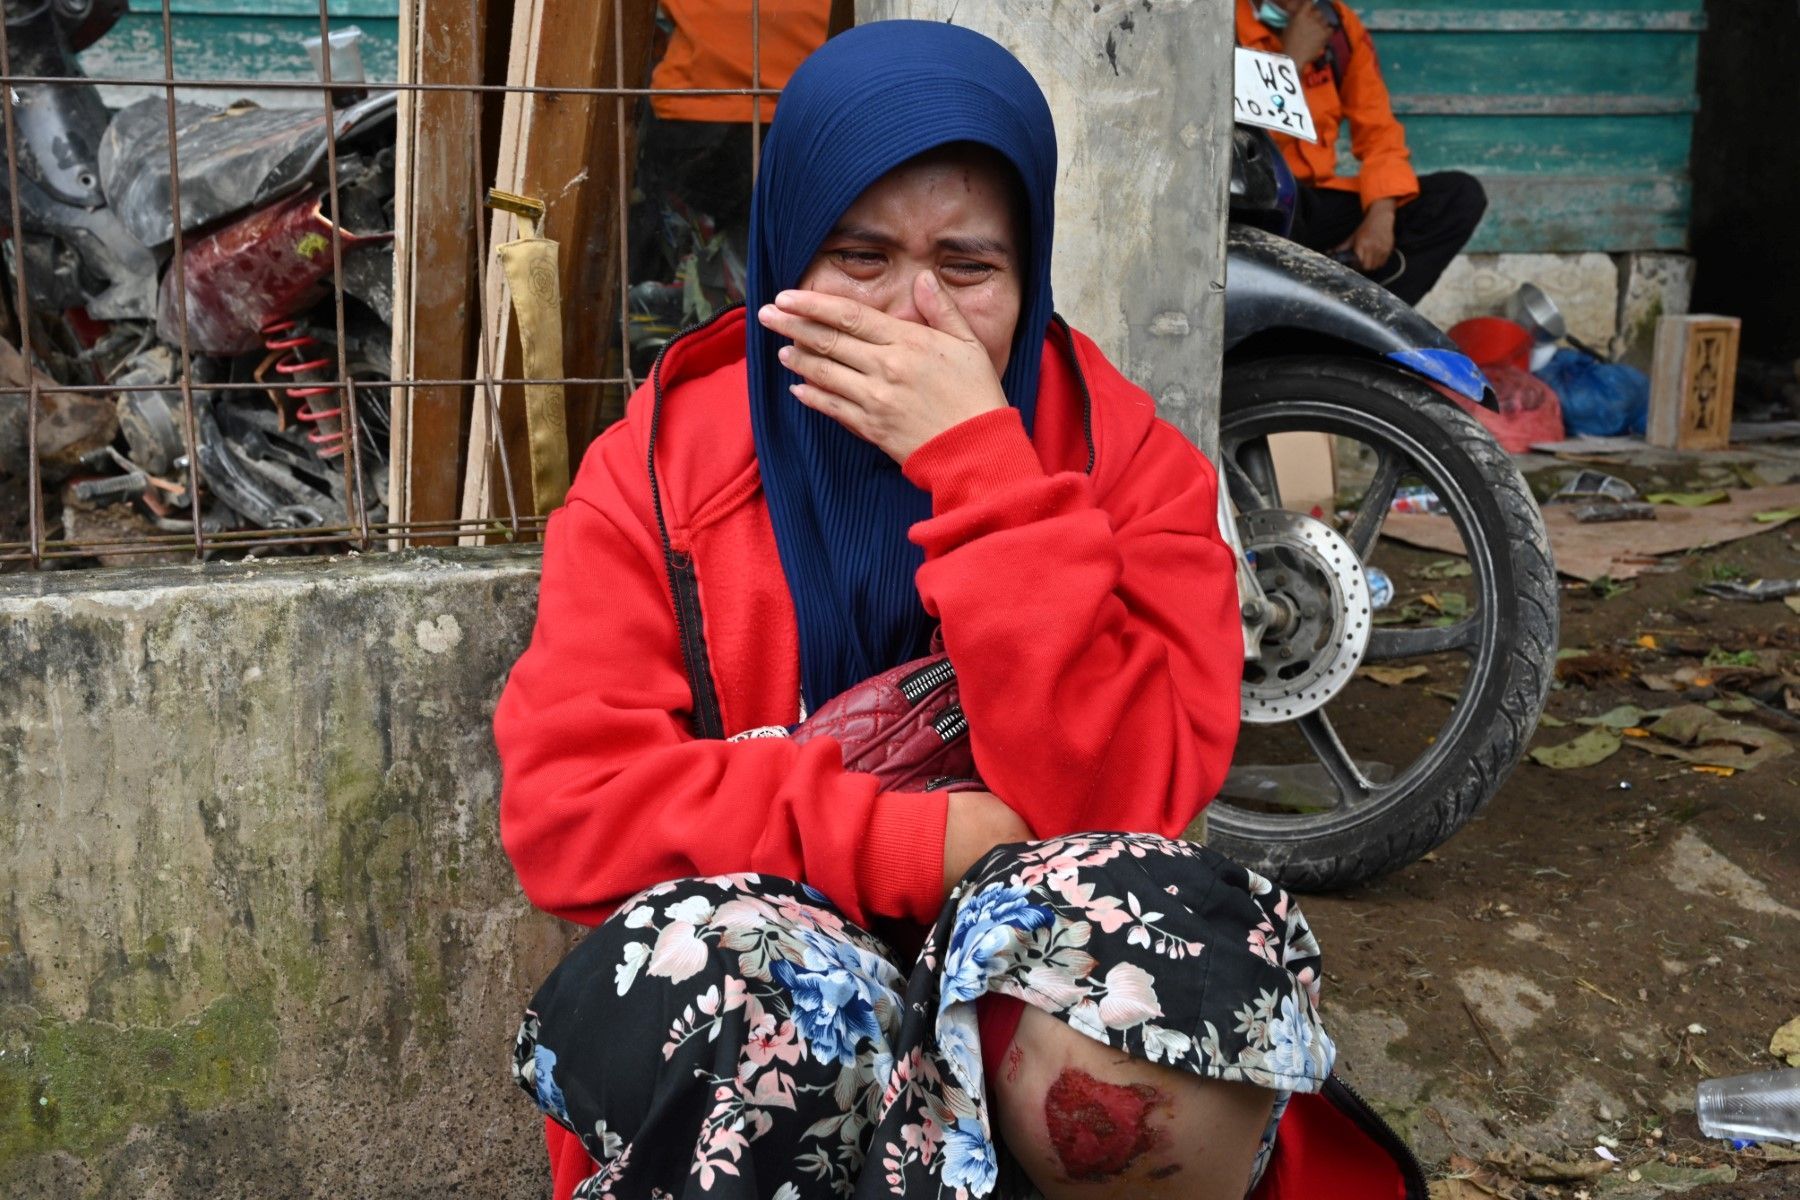 'It's all ruined': Friends, relatives face Indonesia quake trauma